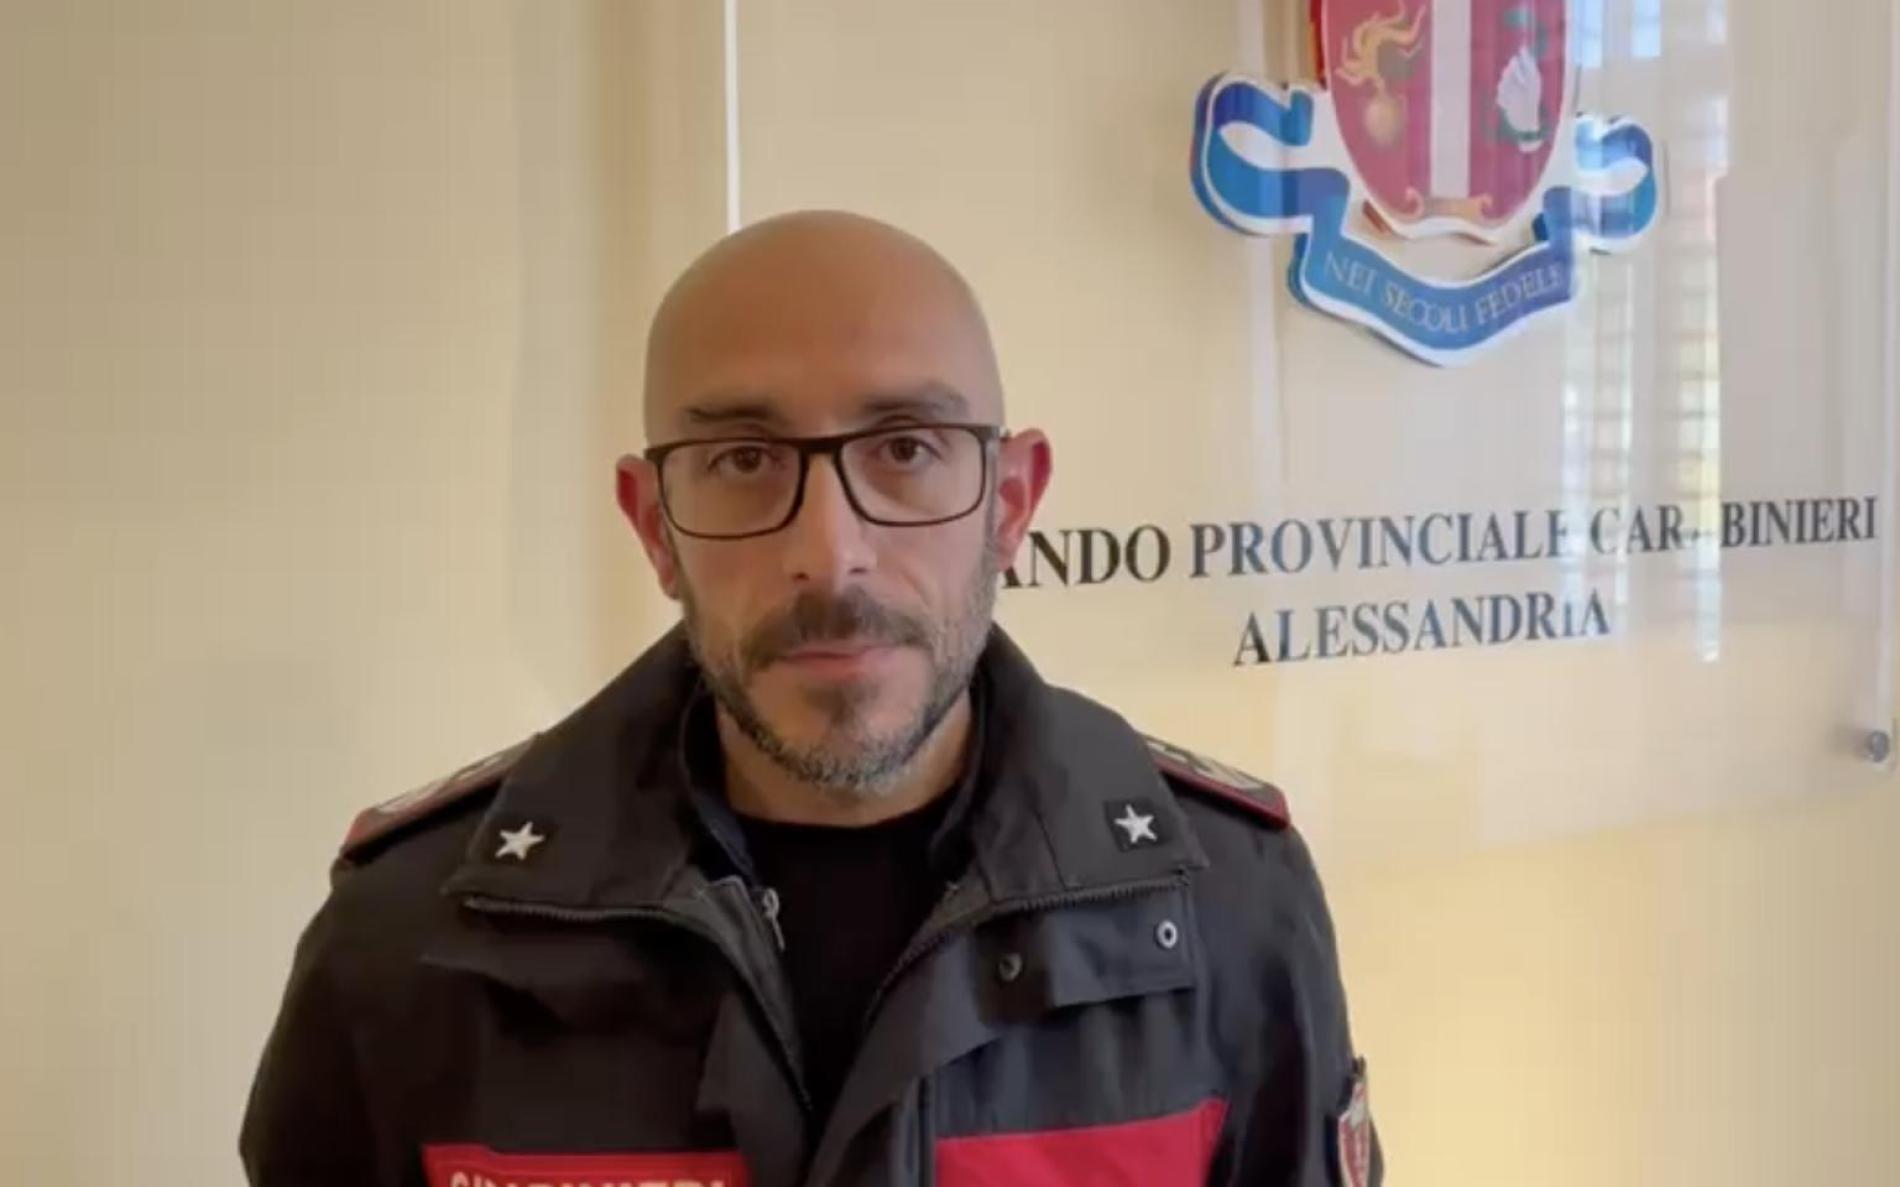 Al carabiniere-eroe del Meier il primo premio “Matteo Gastaldo”